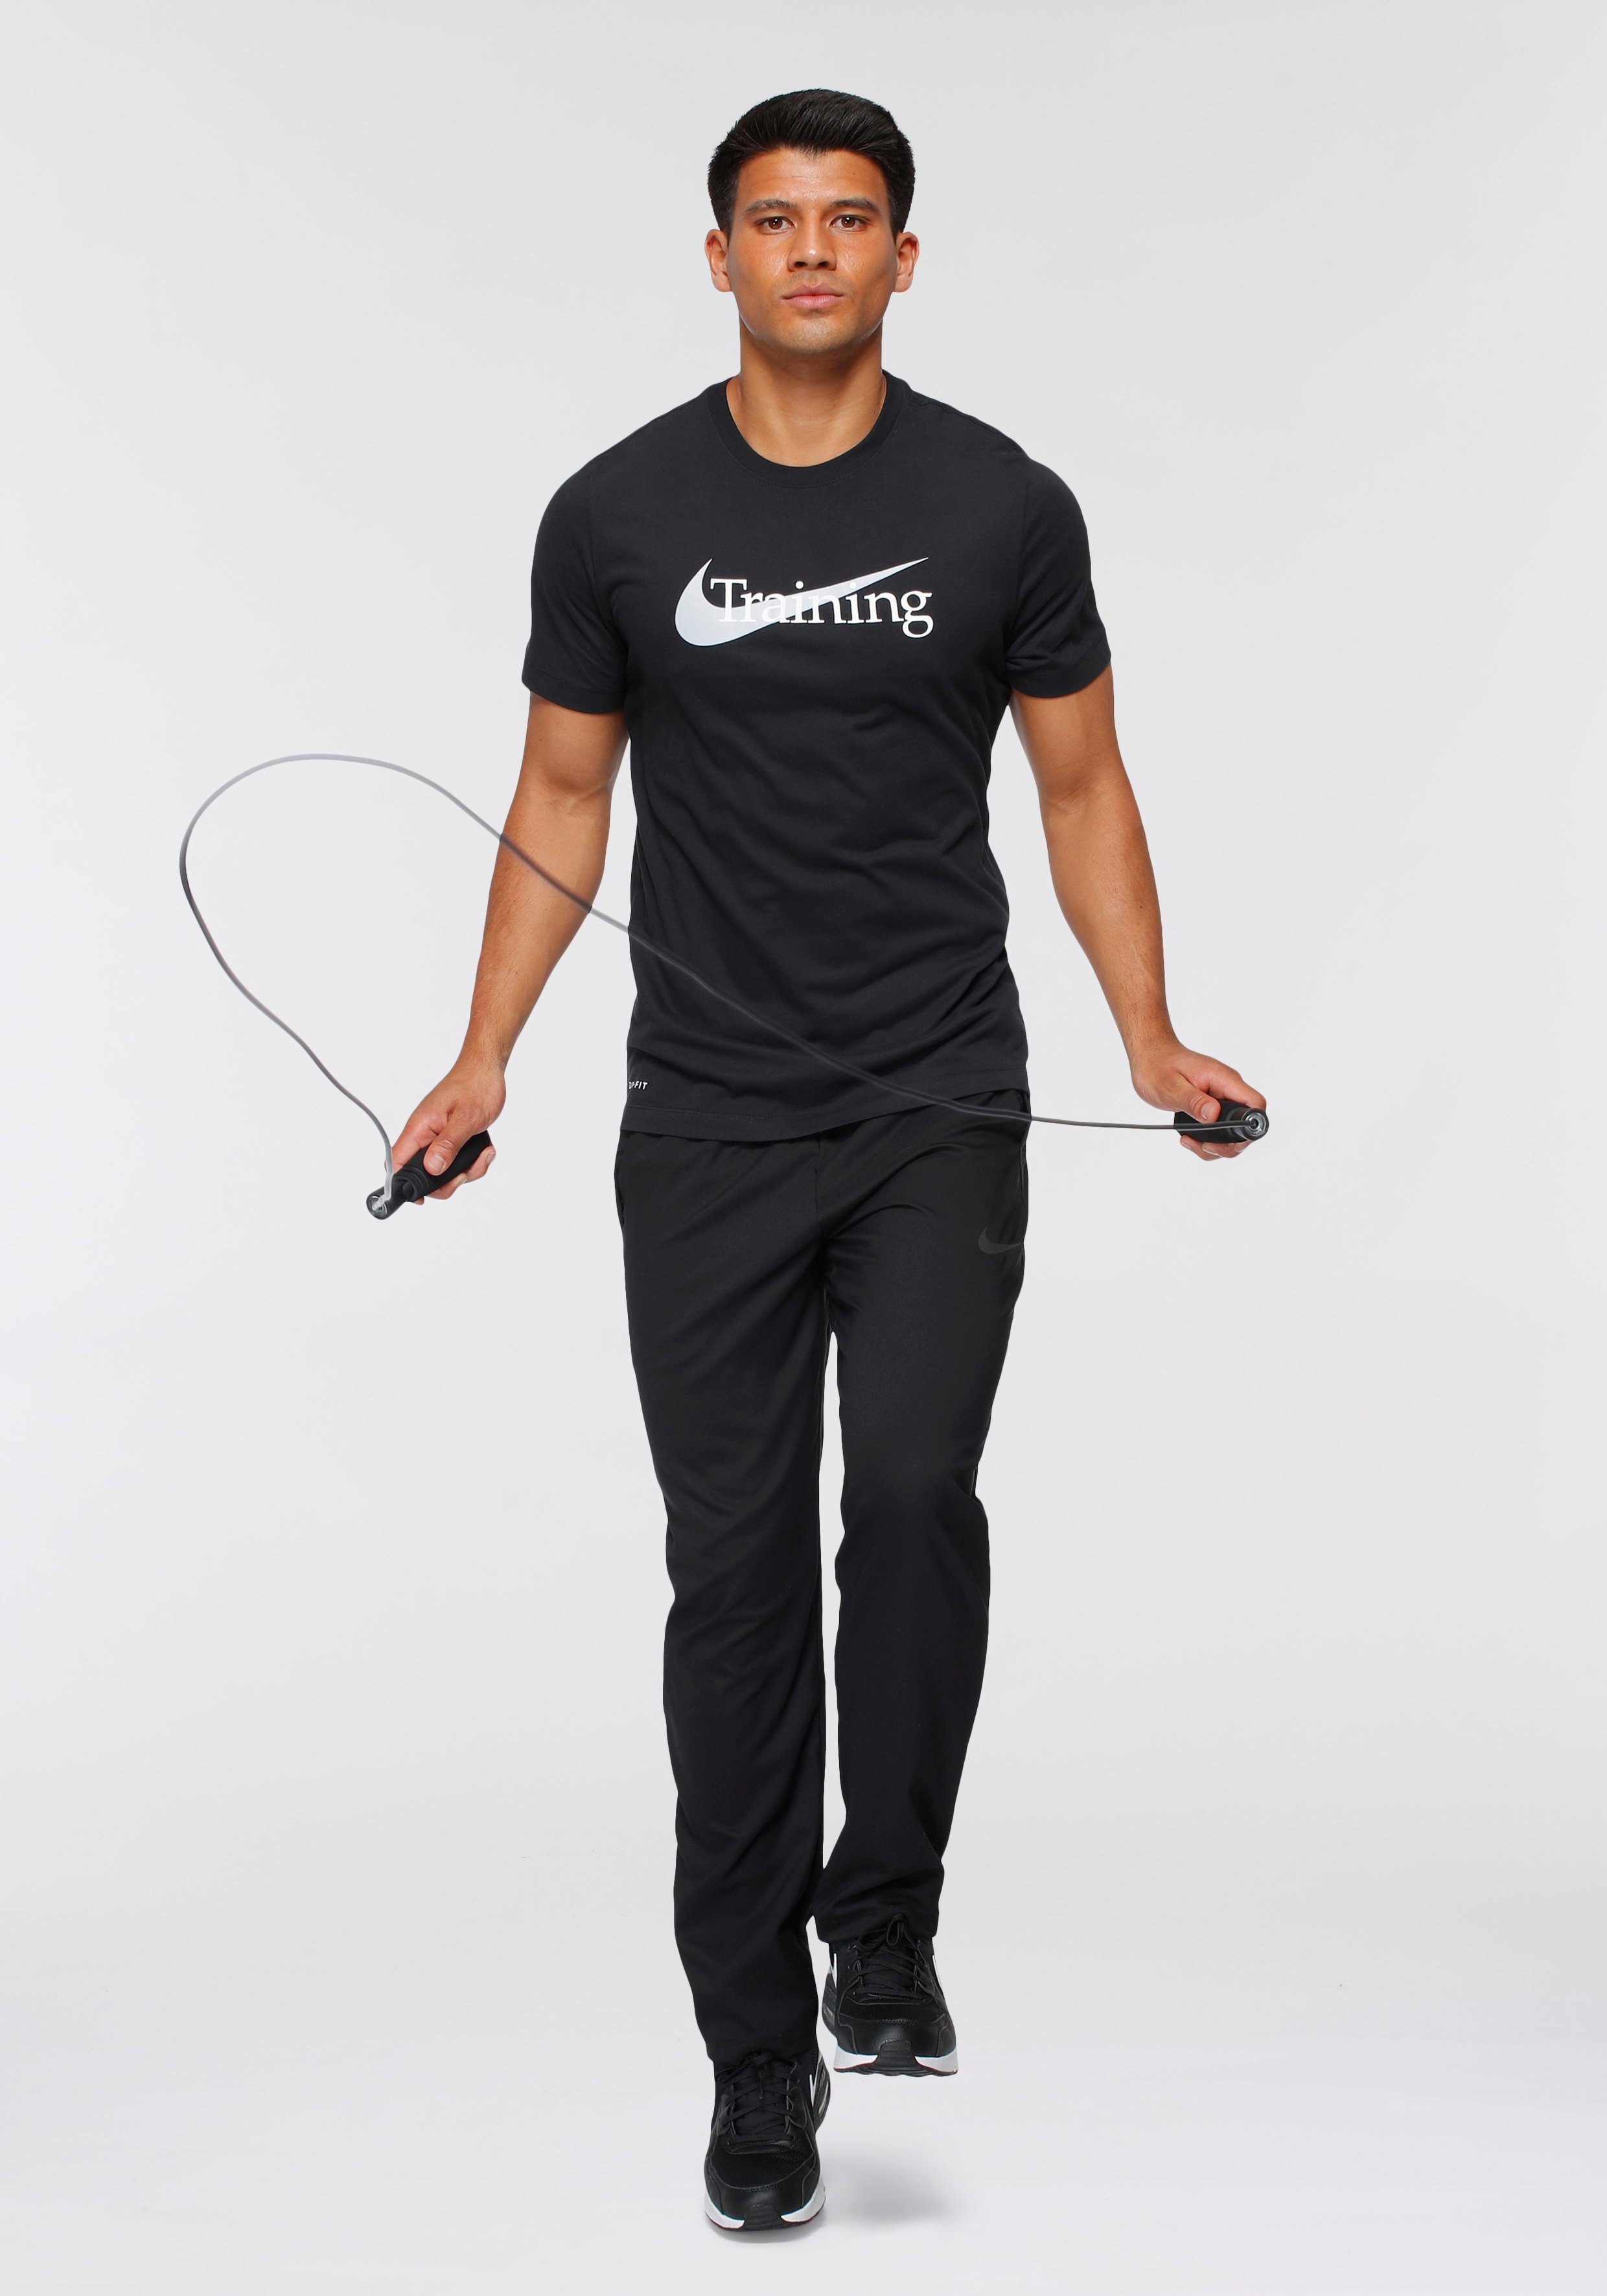 Nike Trainingsshirt Dri-FIT T-Shirt schwarz Men's Training Swoosh